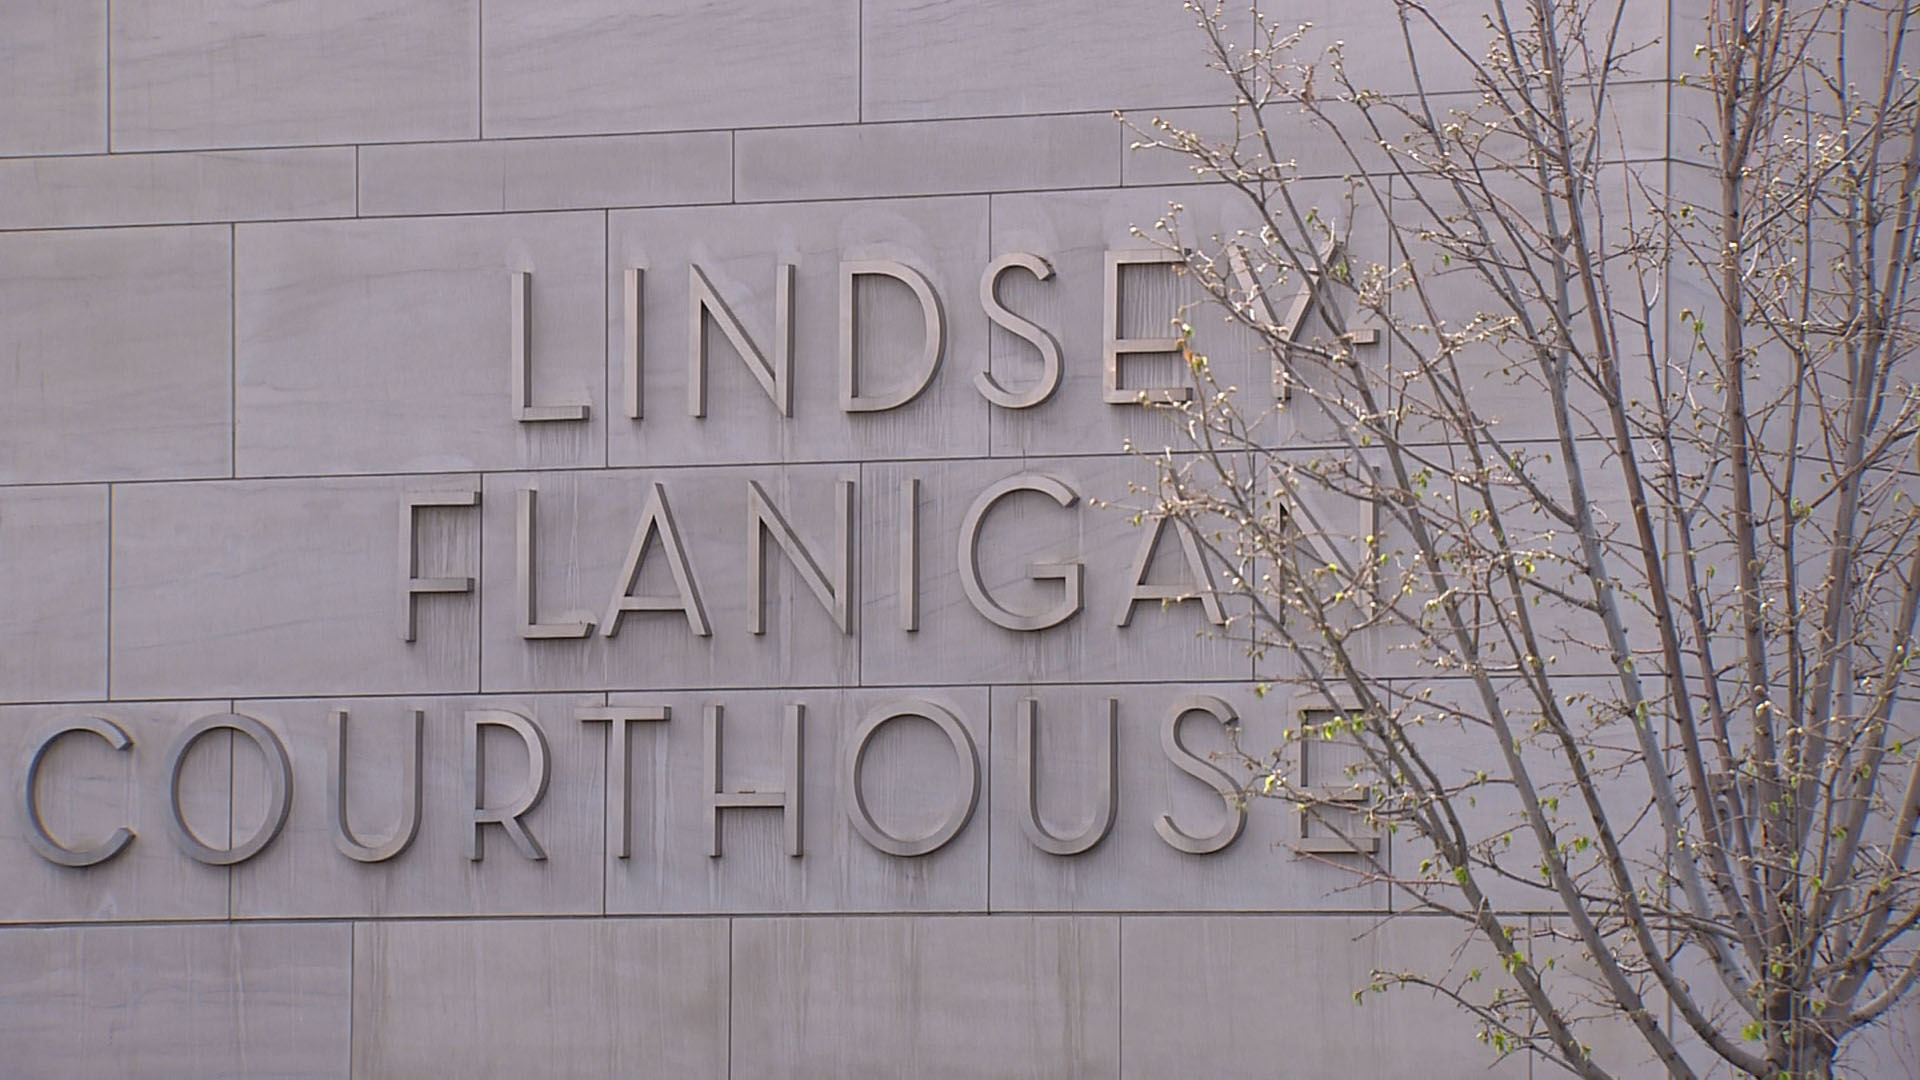 Lindsey Flanigan Courthouse judge threats